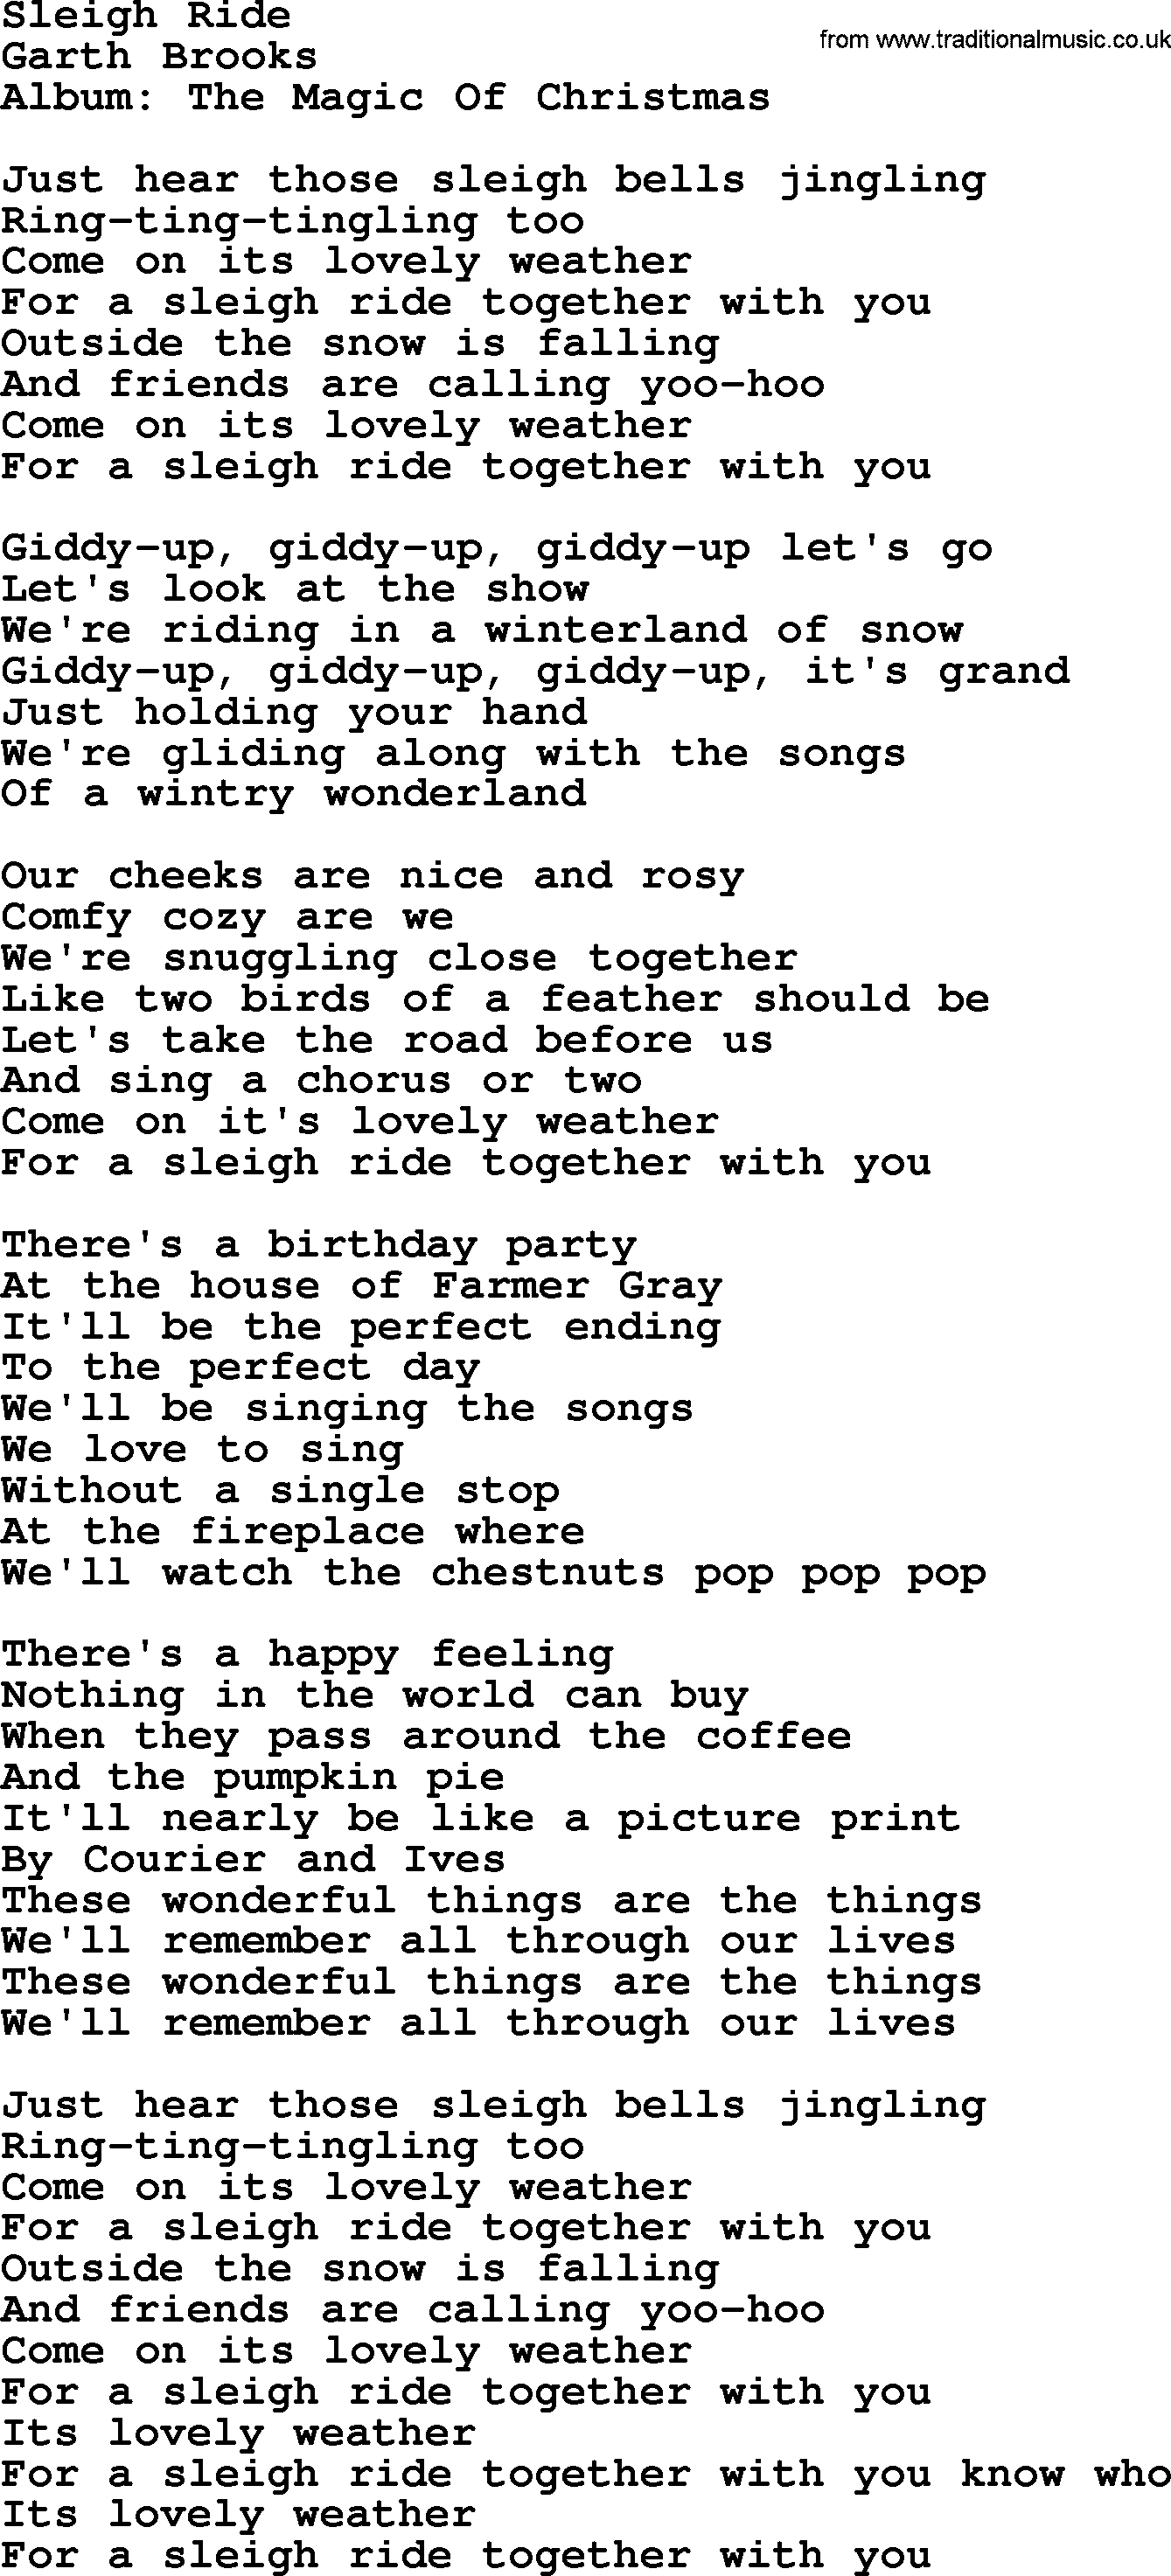 Sleigh Ride, by Garth Brooks - lyrics.